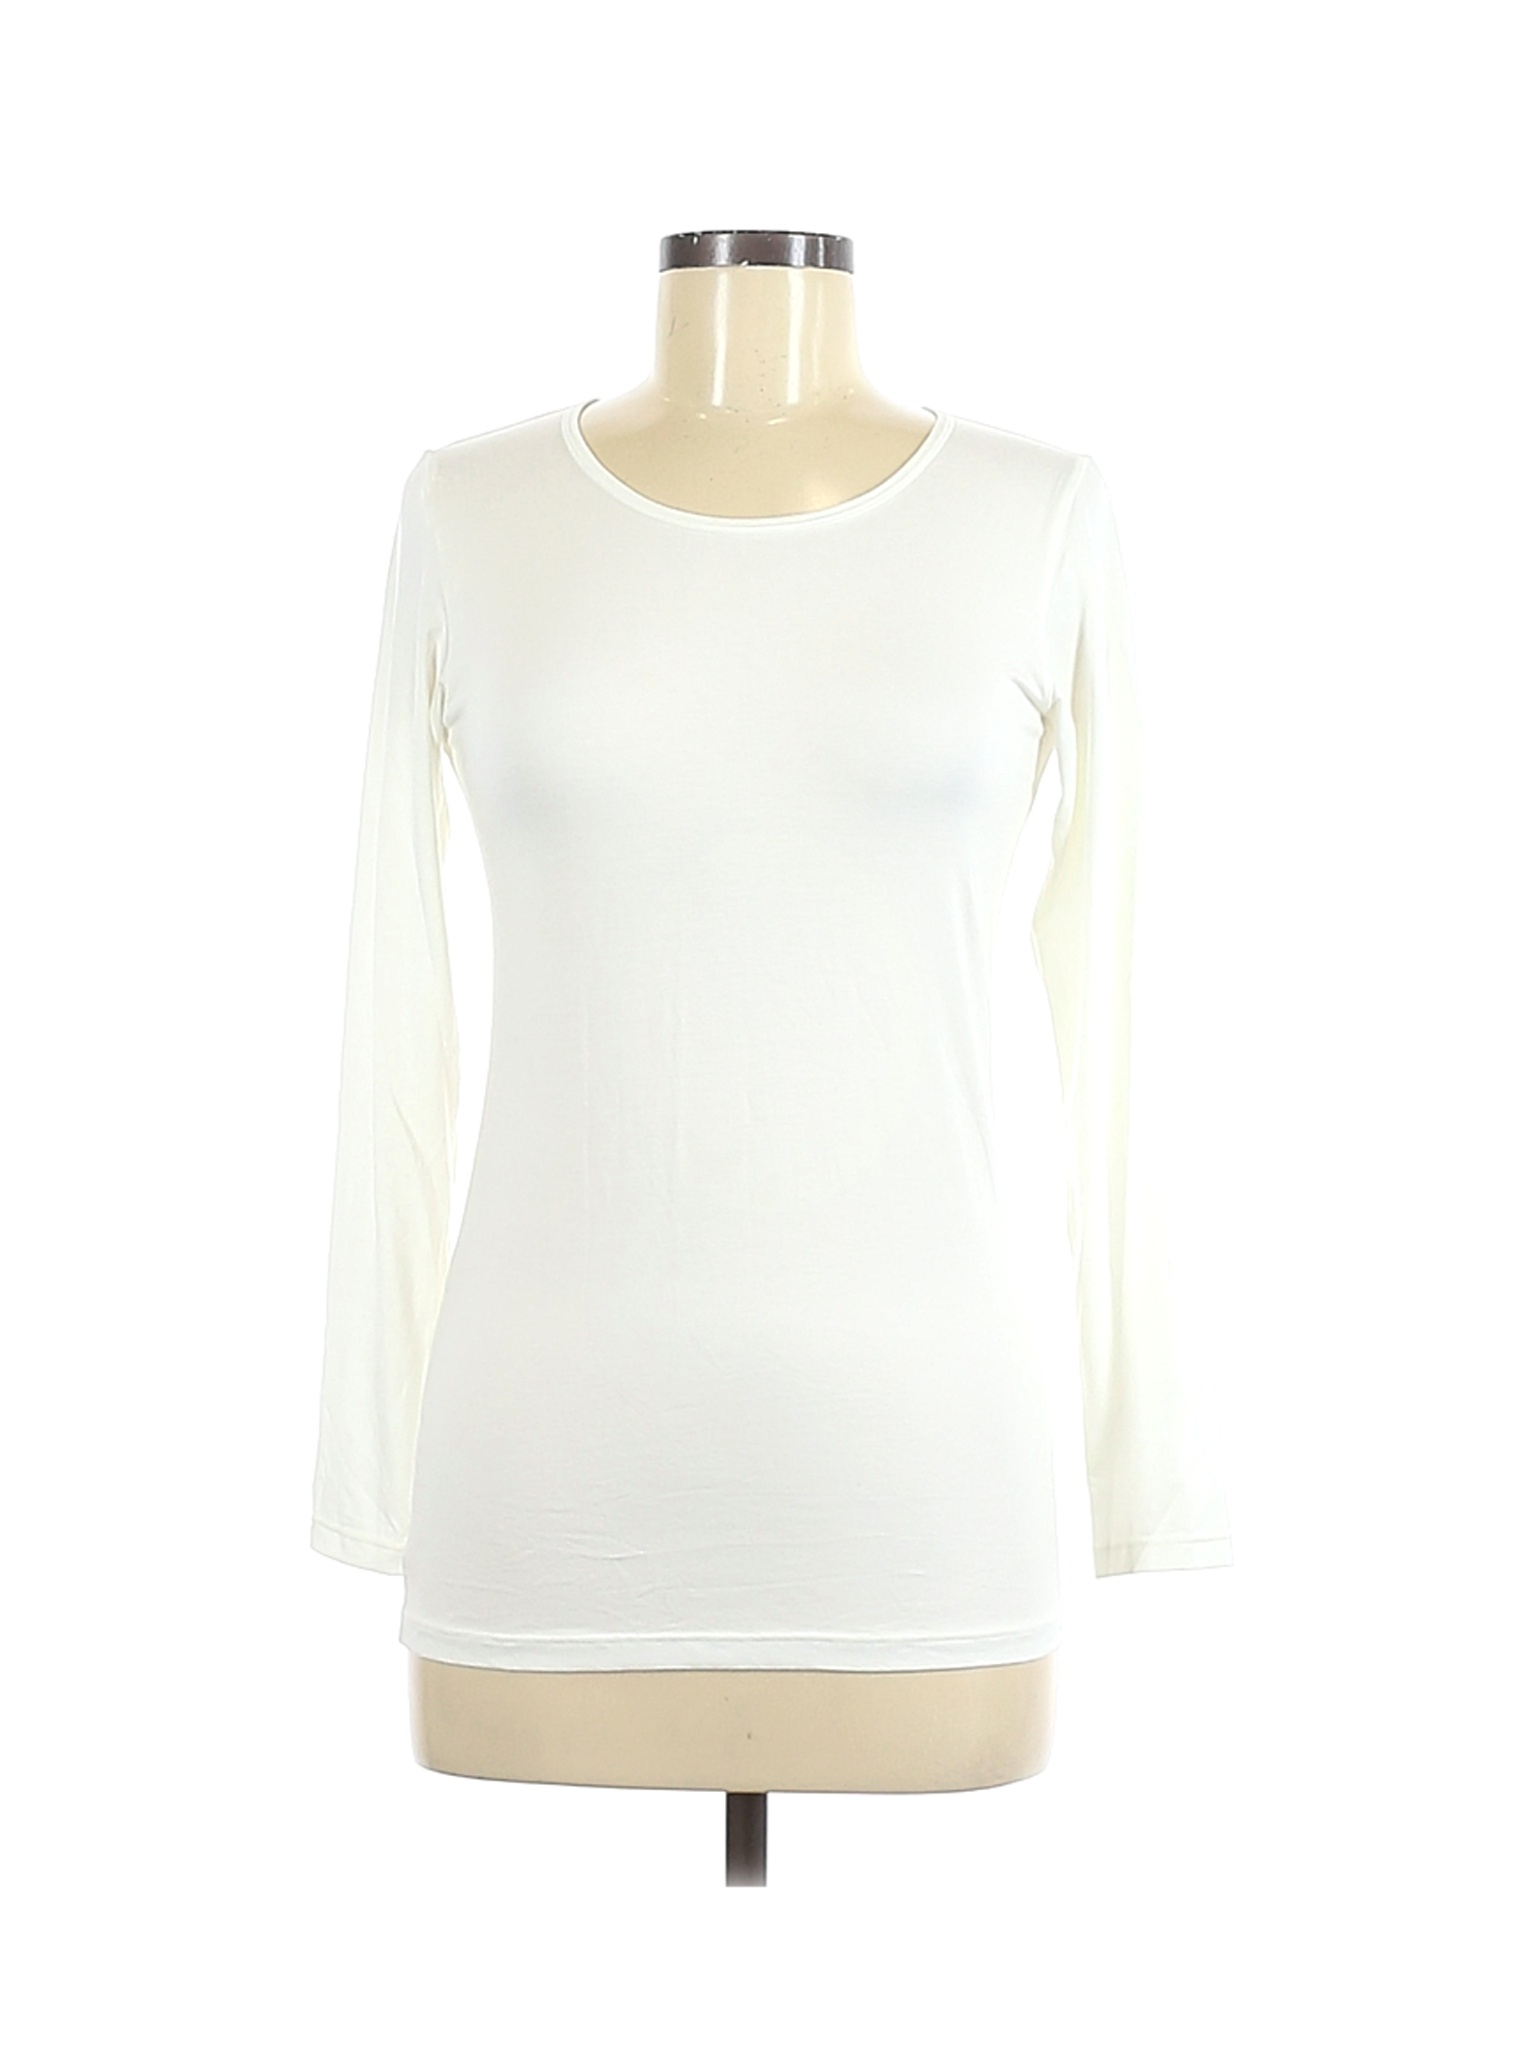 Uniqlo Women White Long Sleeve T-Shirt L | eBay